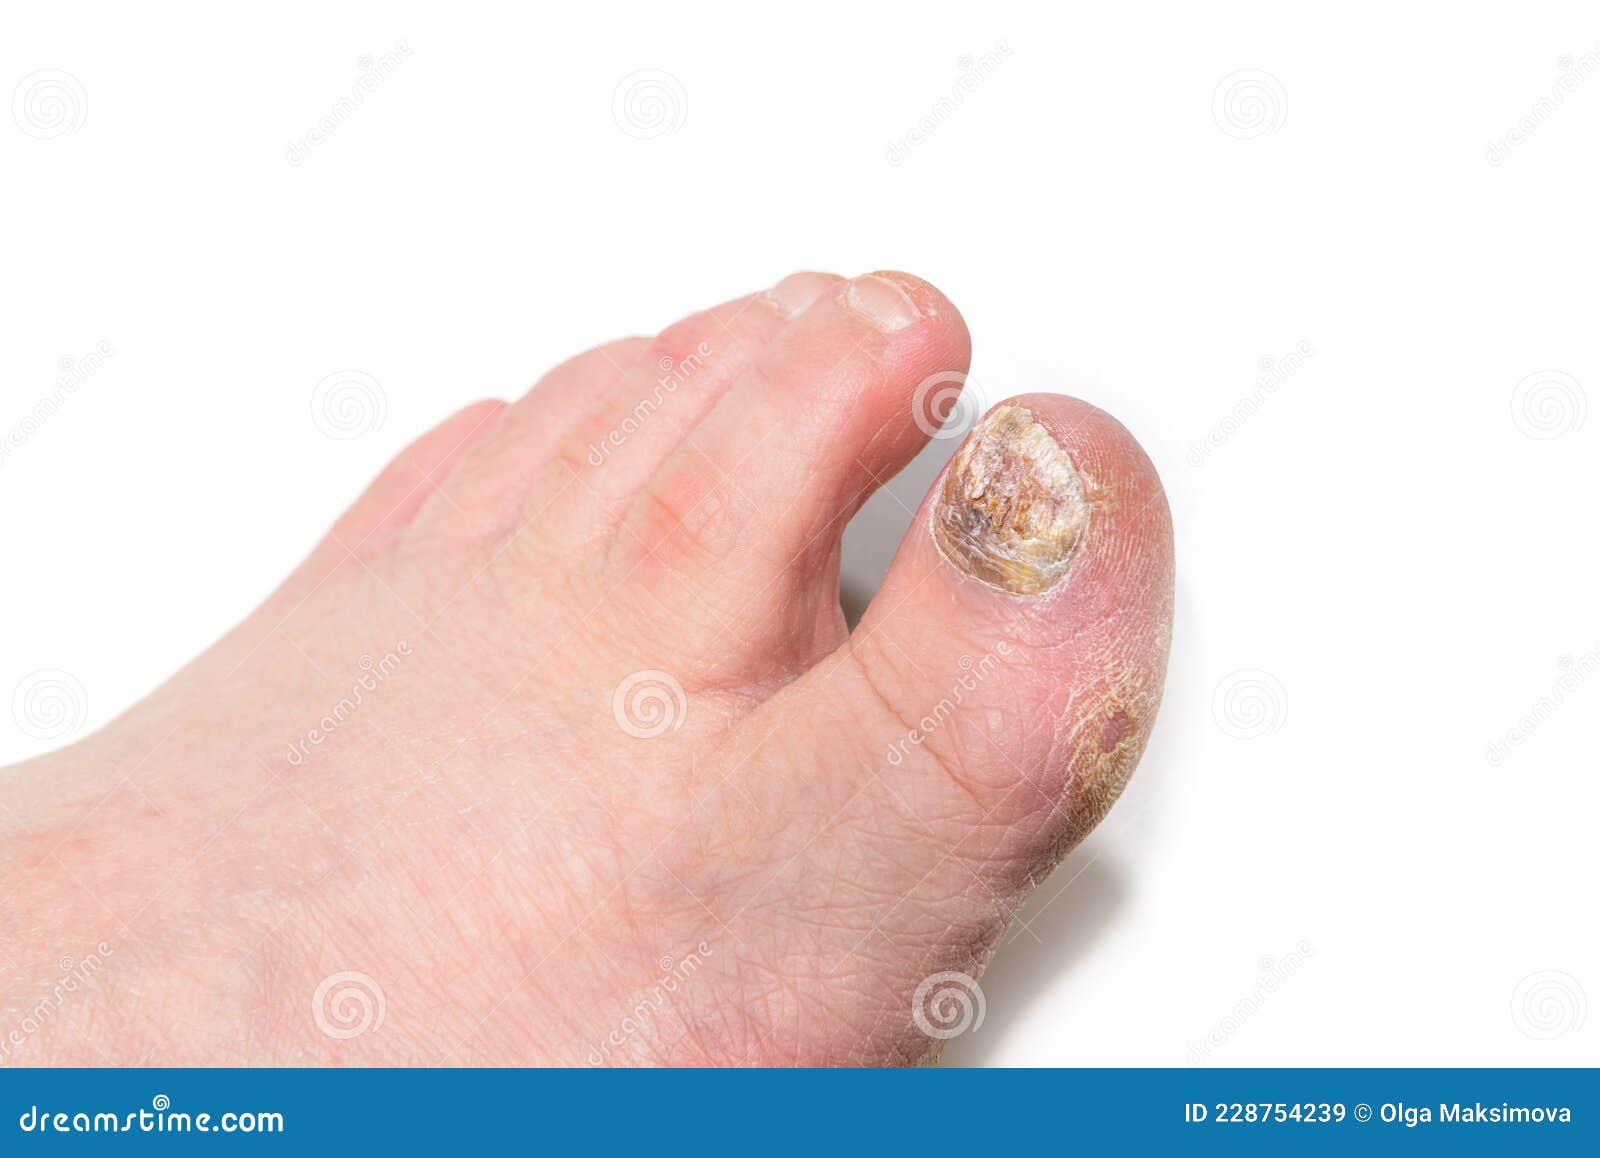 nail onichomicosis nail gombus kezelése